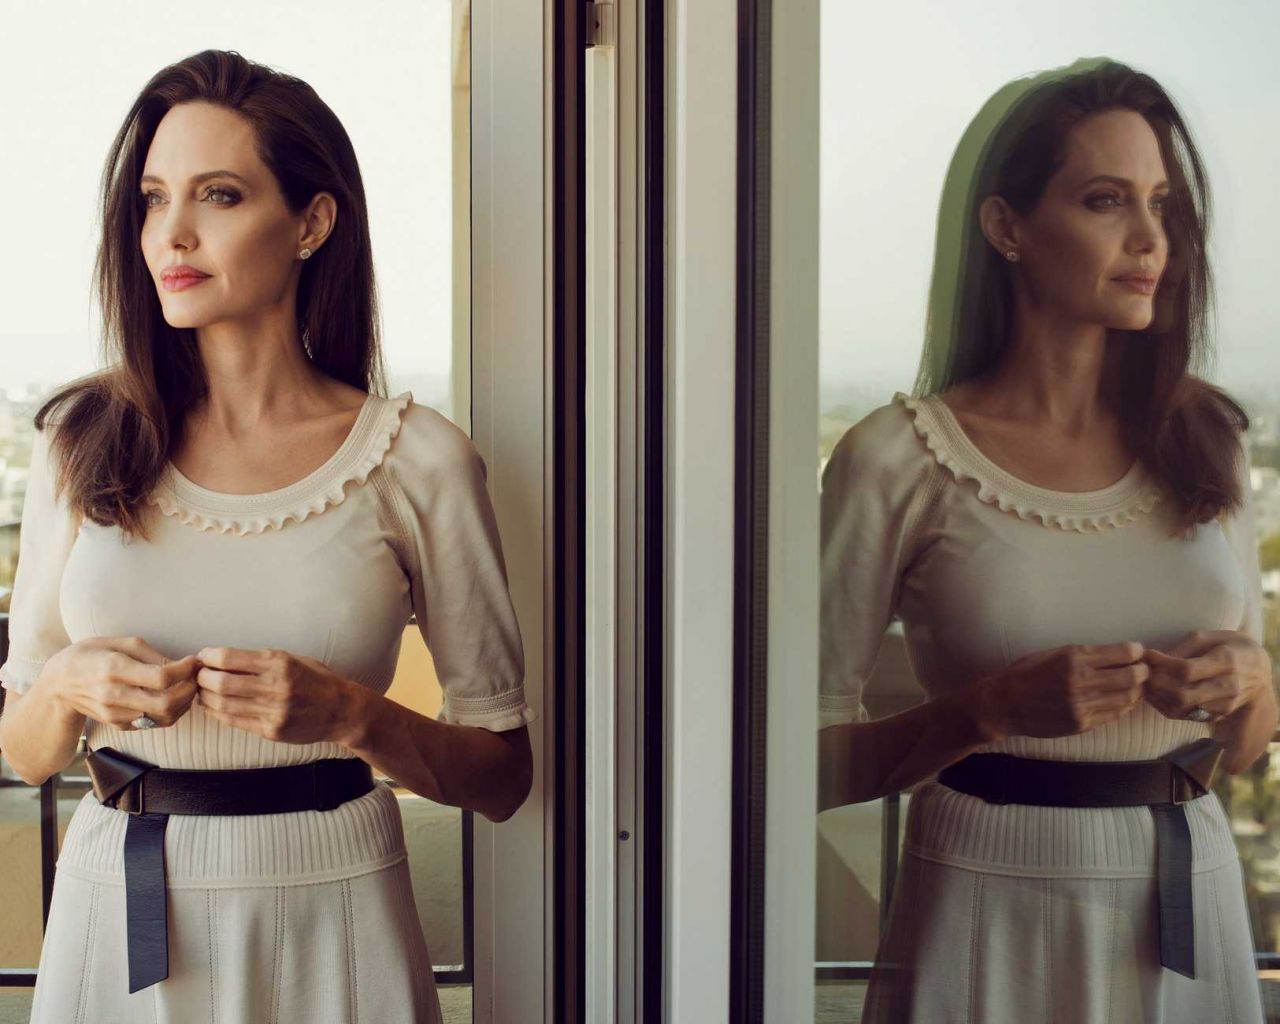 Angelina Jolie in New York City, New York on Monday 17/01/2022  #VeronicaTasmania